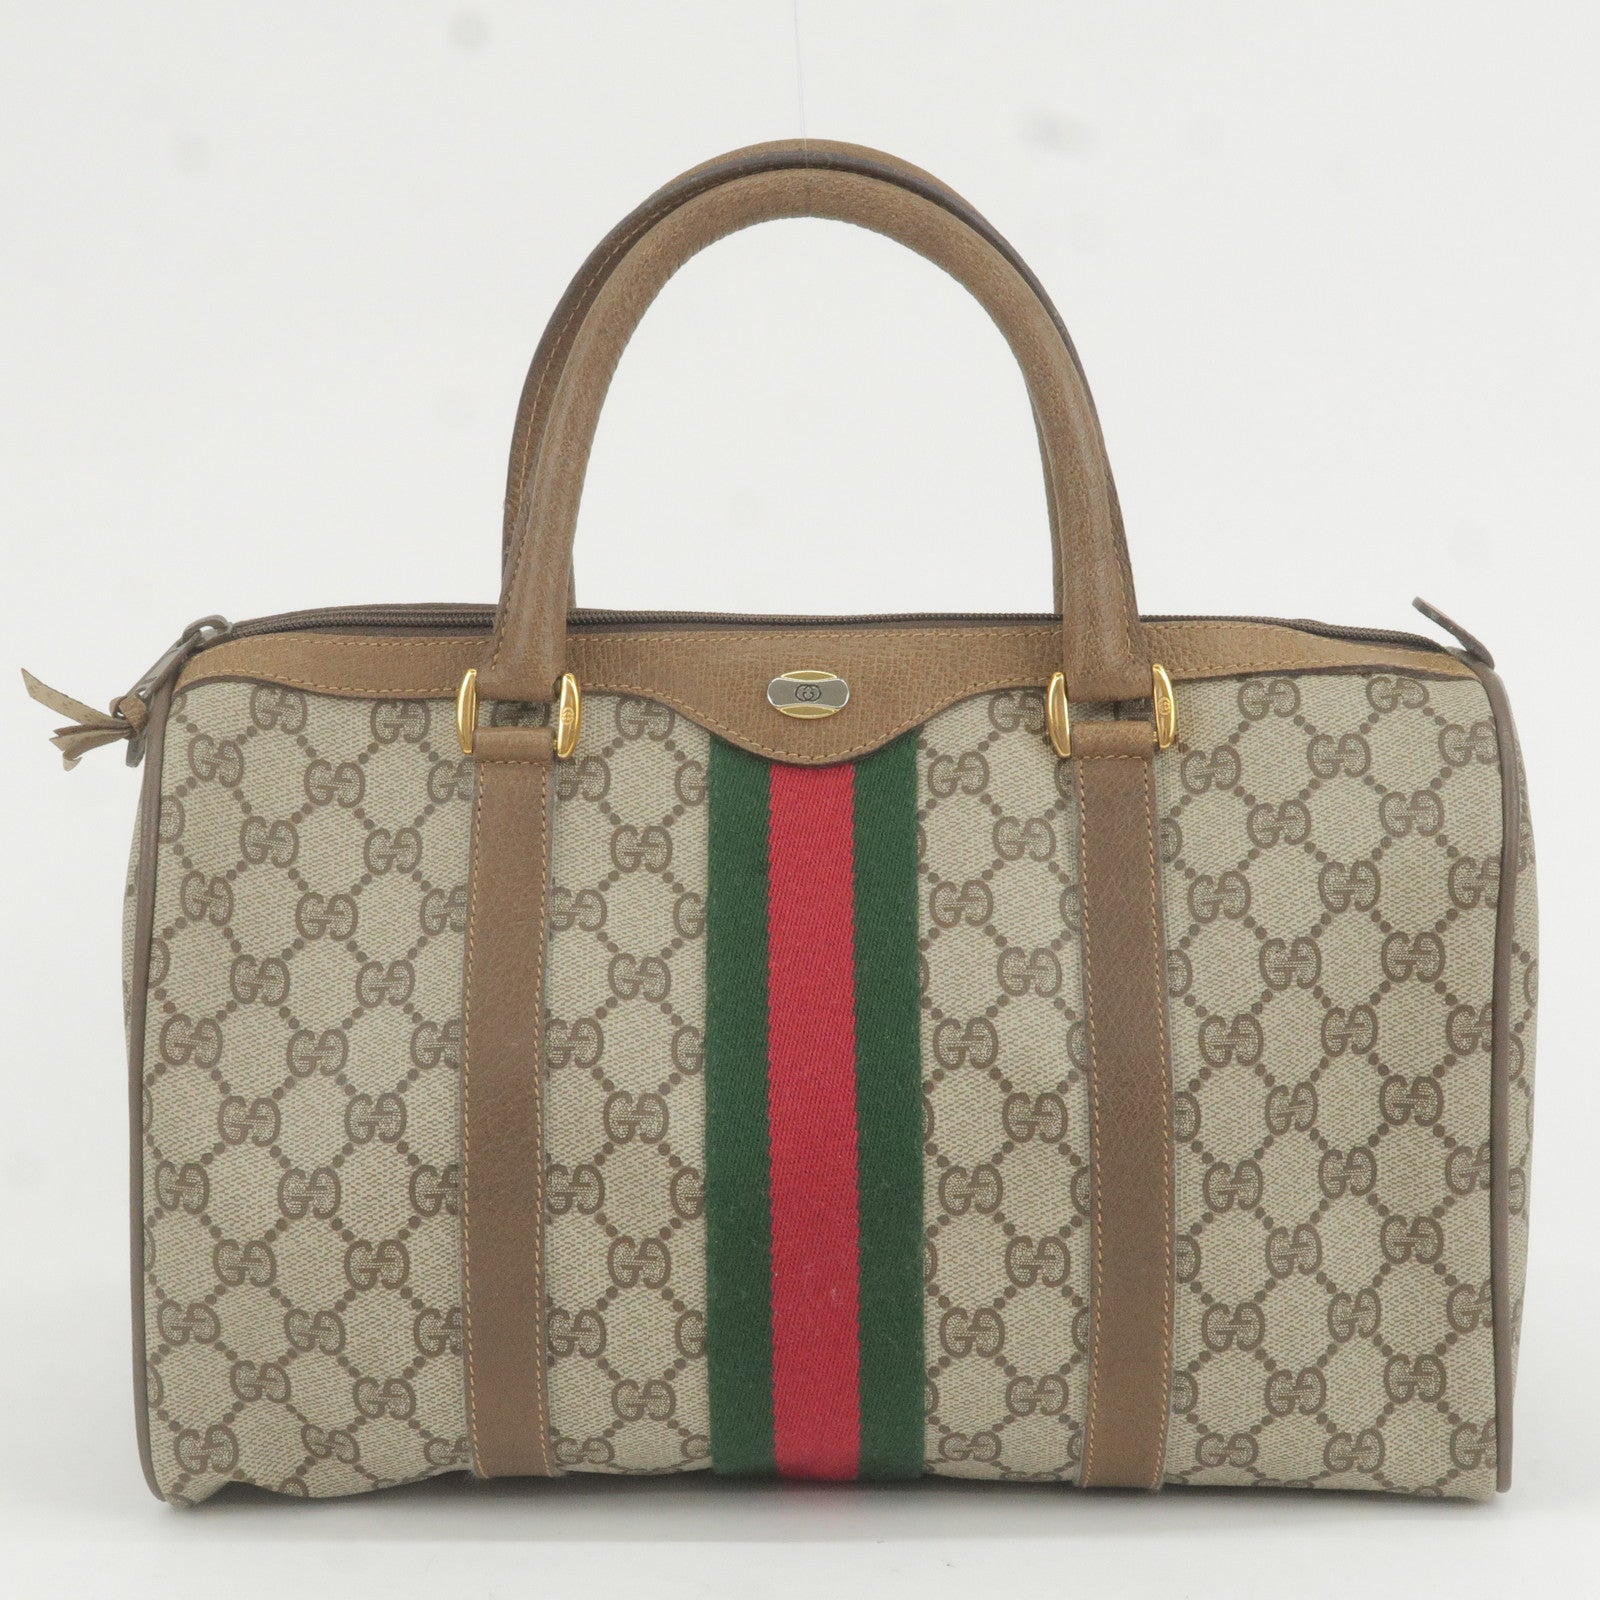 Gucci Limited Edition Tom Ford Snakeskin Jeweled Dragon Bag Purse |  EstateSales.org